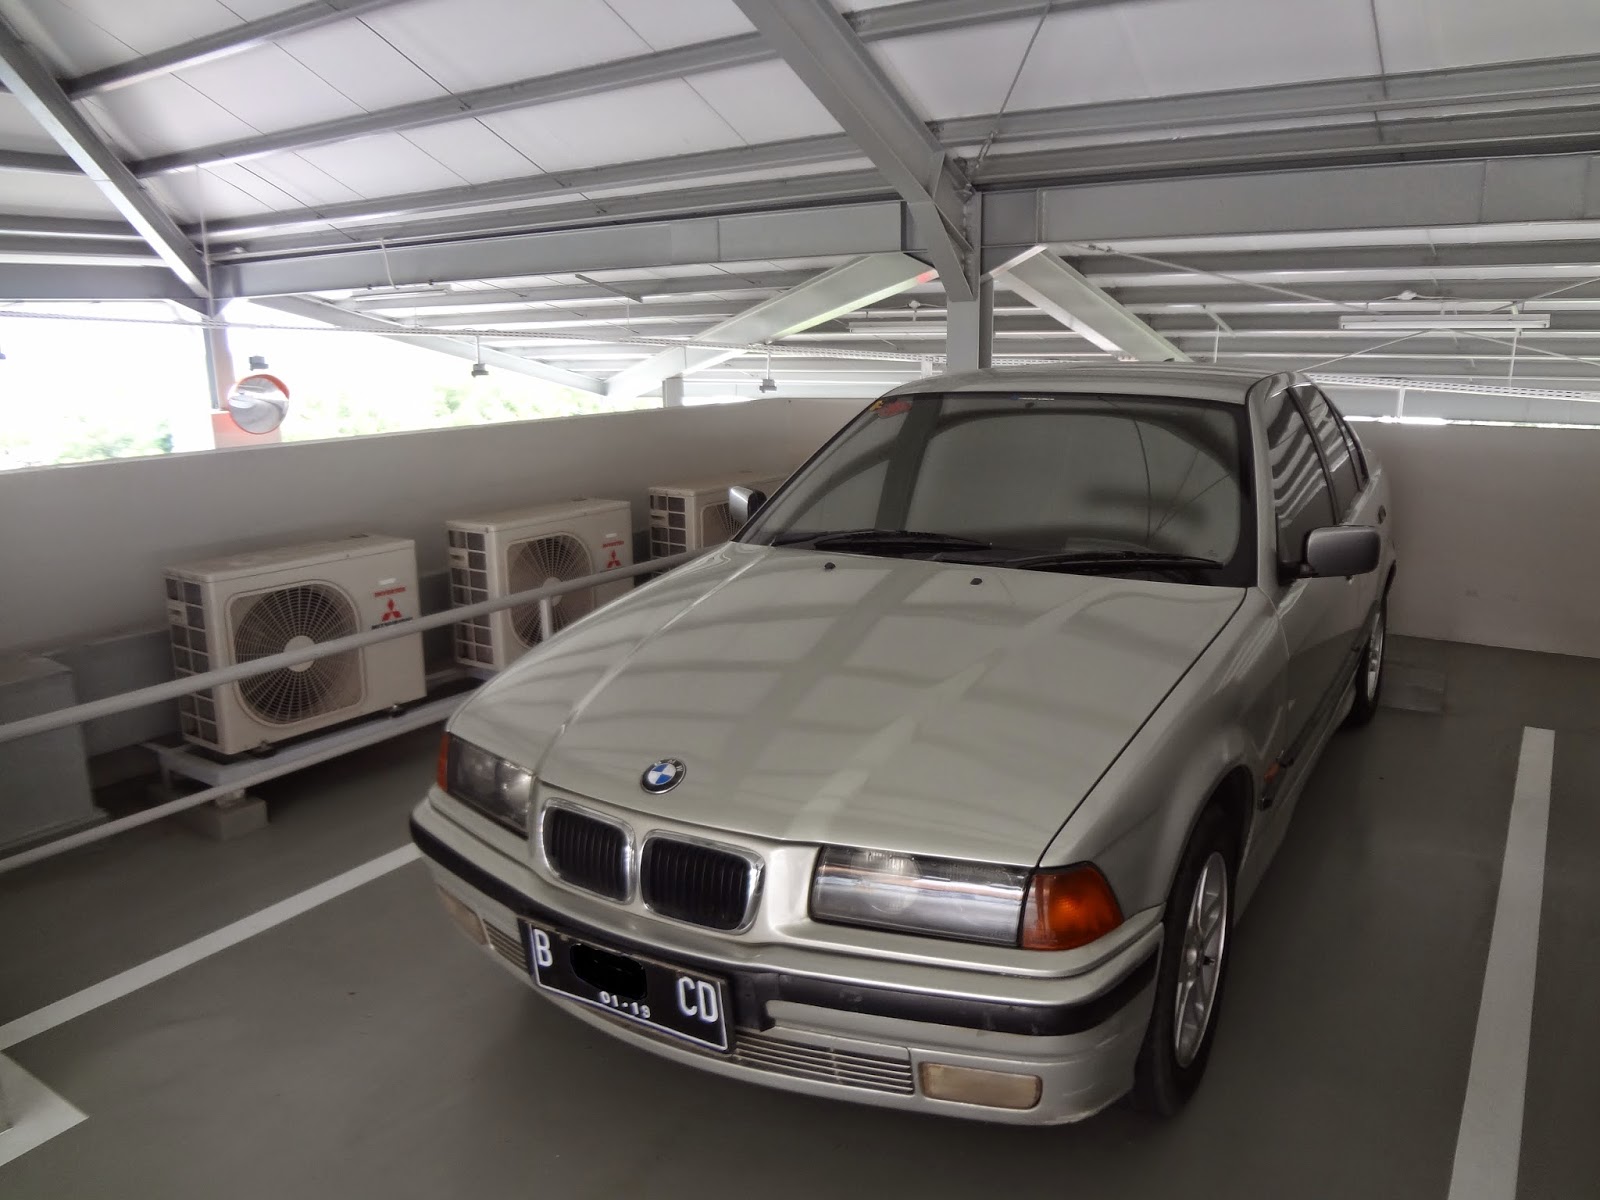 DiJual Mobil  BMW  318i Tahun  1997  Photo Blog